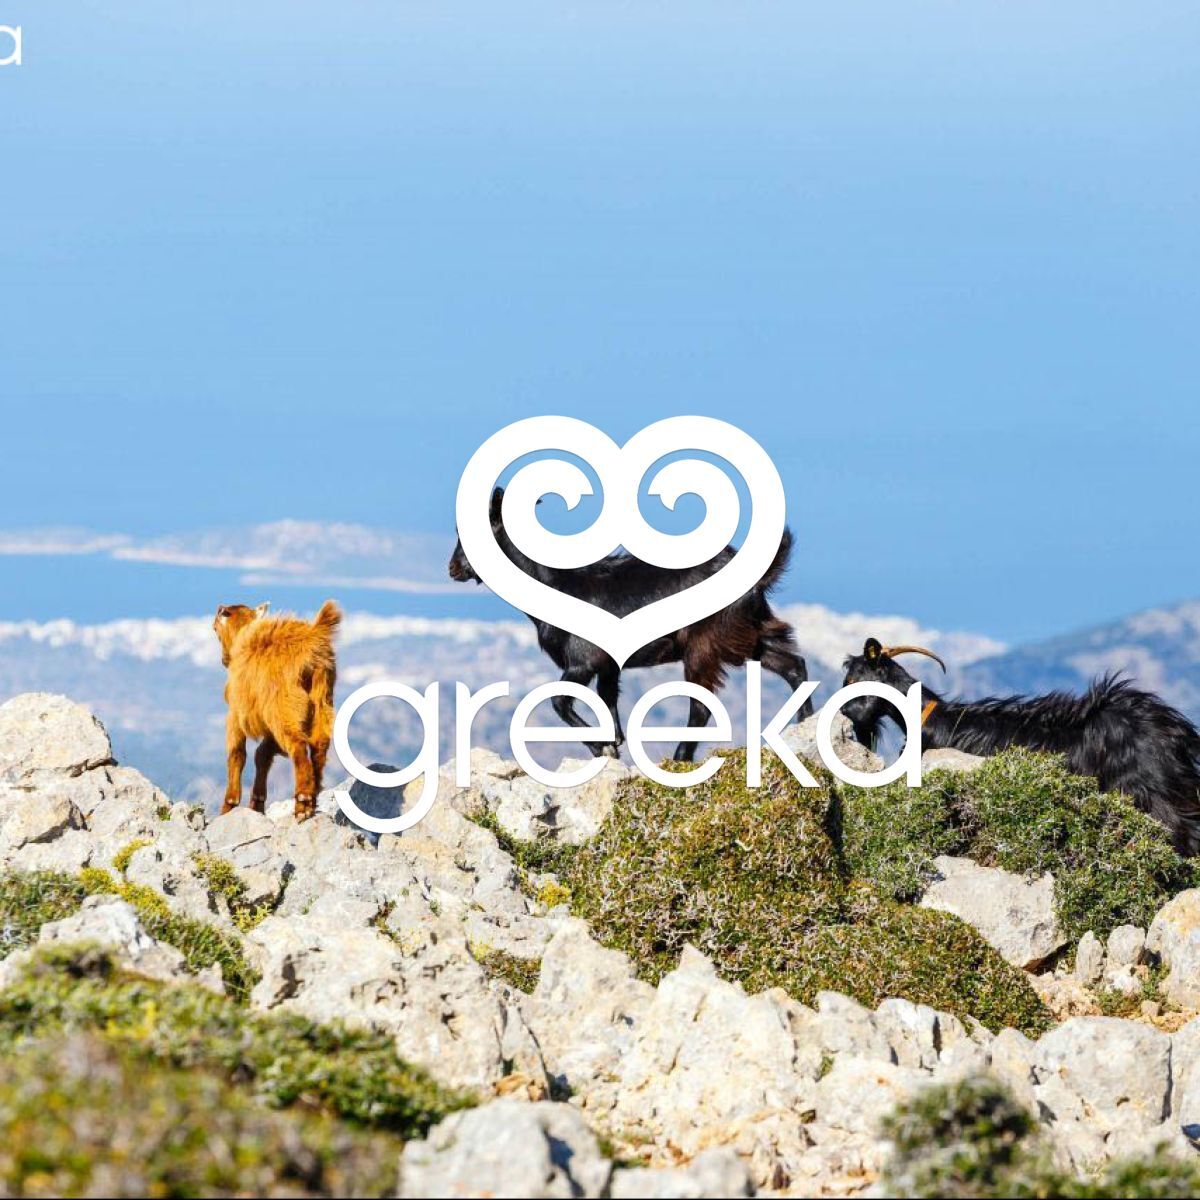 Fauna in Greece: Birds, wild and domestic animals | Greeka